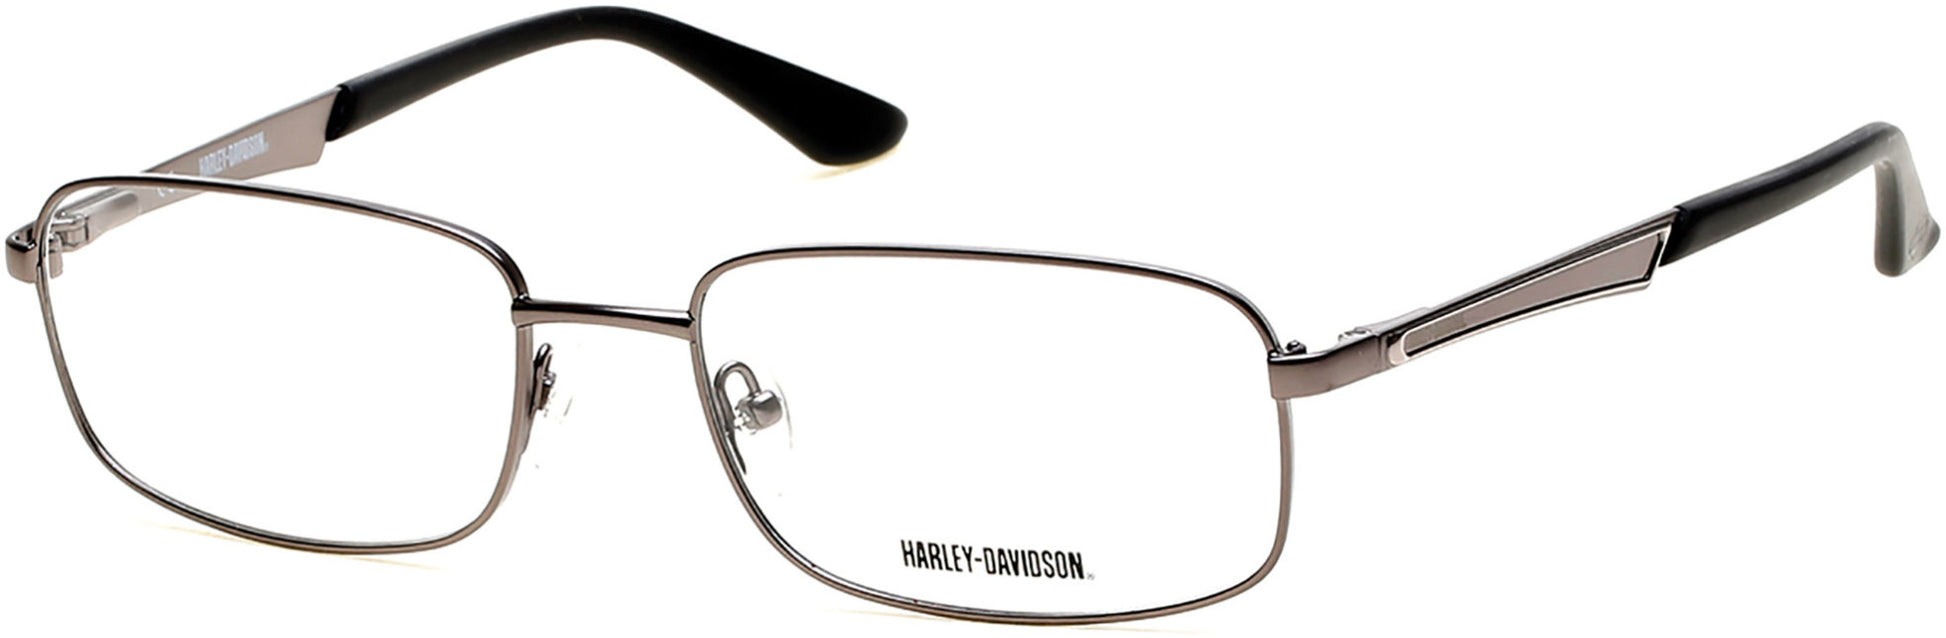 Harley-Davidson HD0728 Eyeglasses 049-008 - Shiny Gumetal